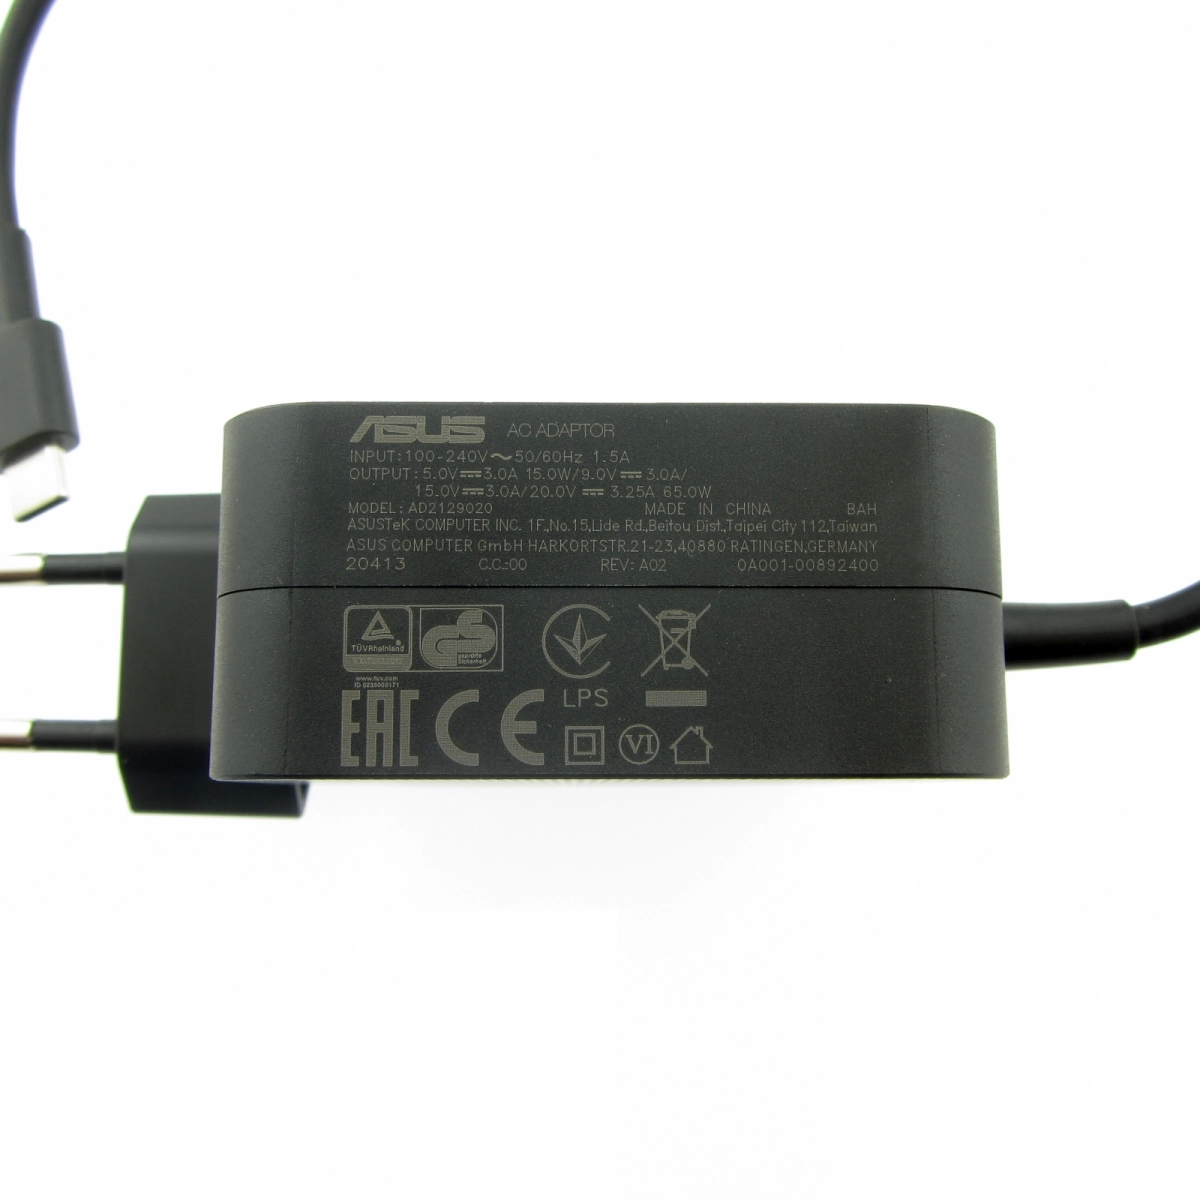 Original Netzteil für ASUS 0A001-00443400, 20V, 3.25A, Stecker USB-C, 65W